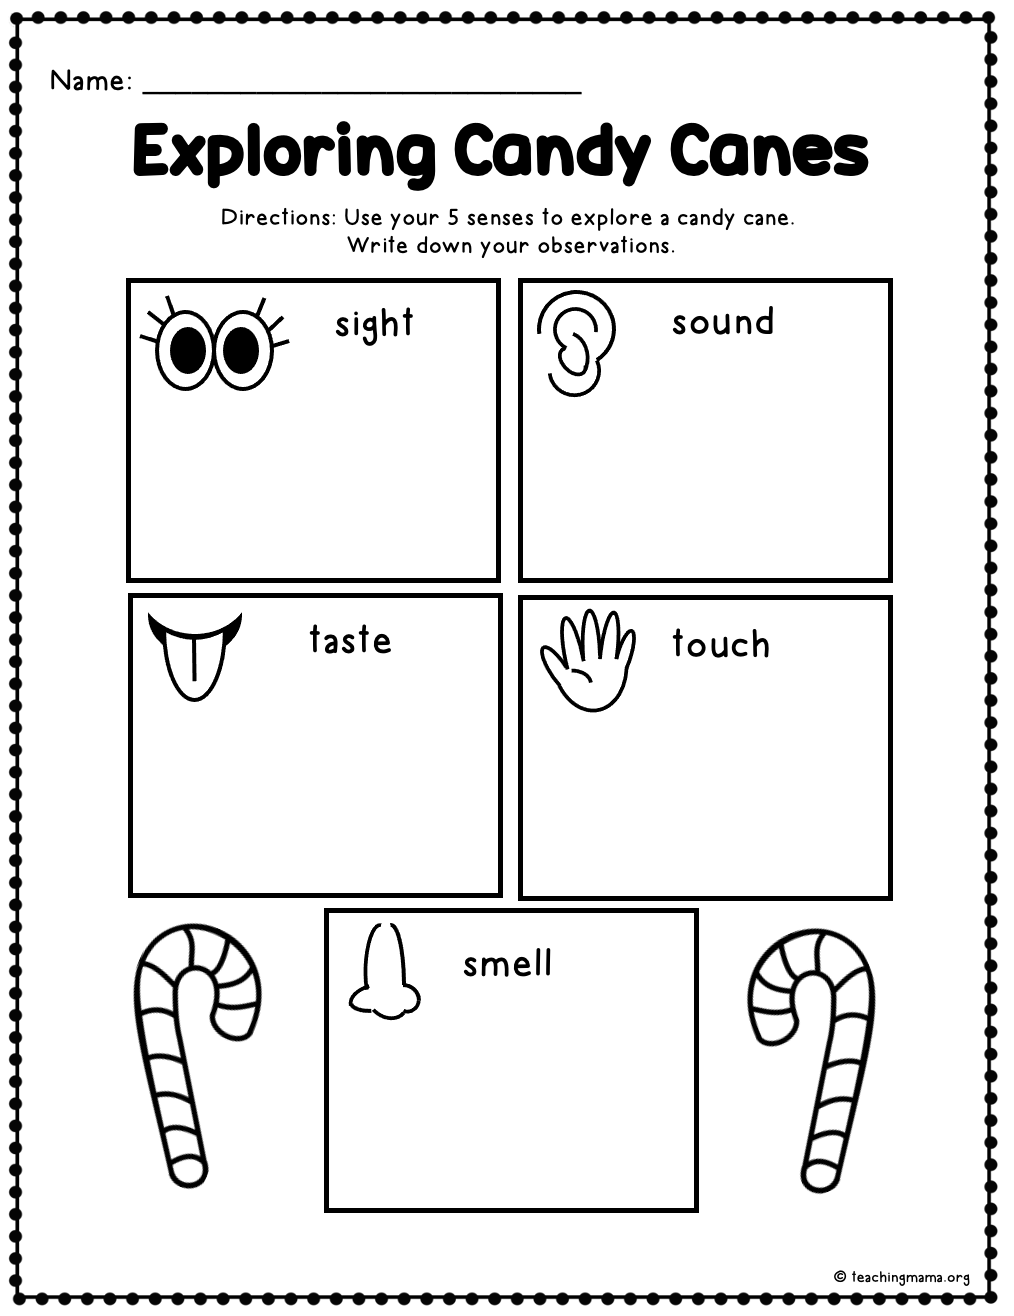 5 senses candy canes